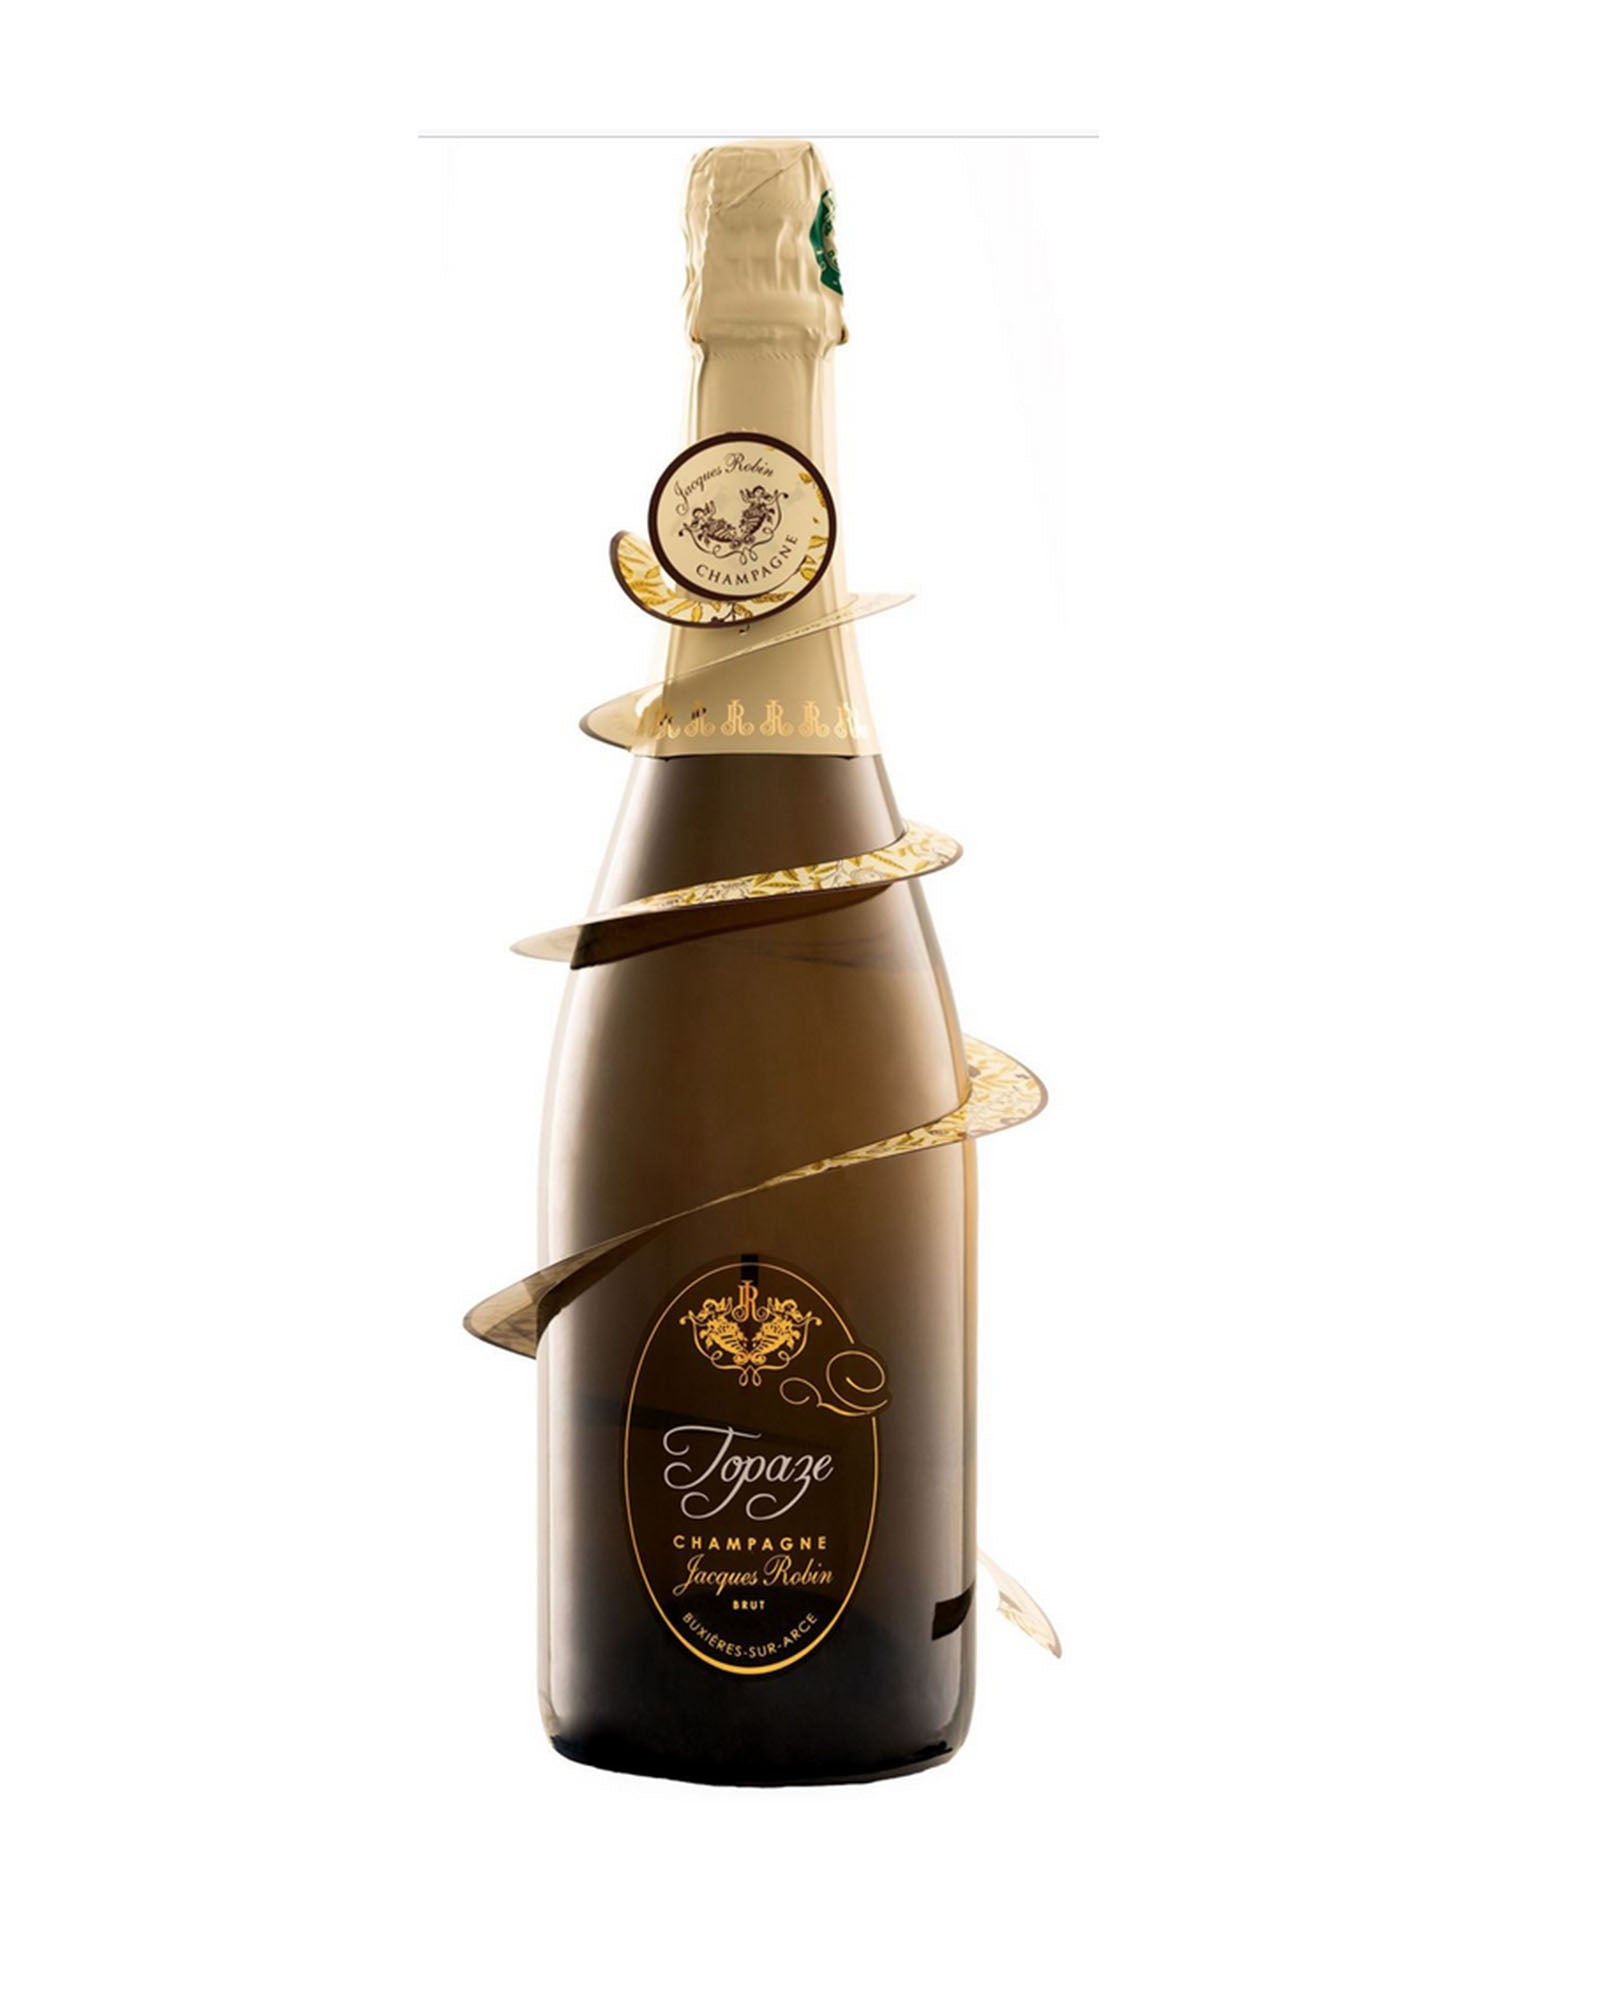 Champagne Jacques Robin Cuvée "Topaze"